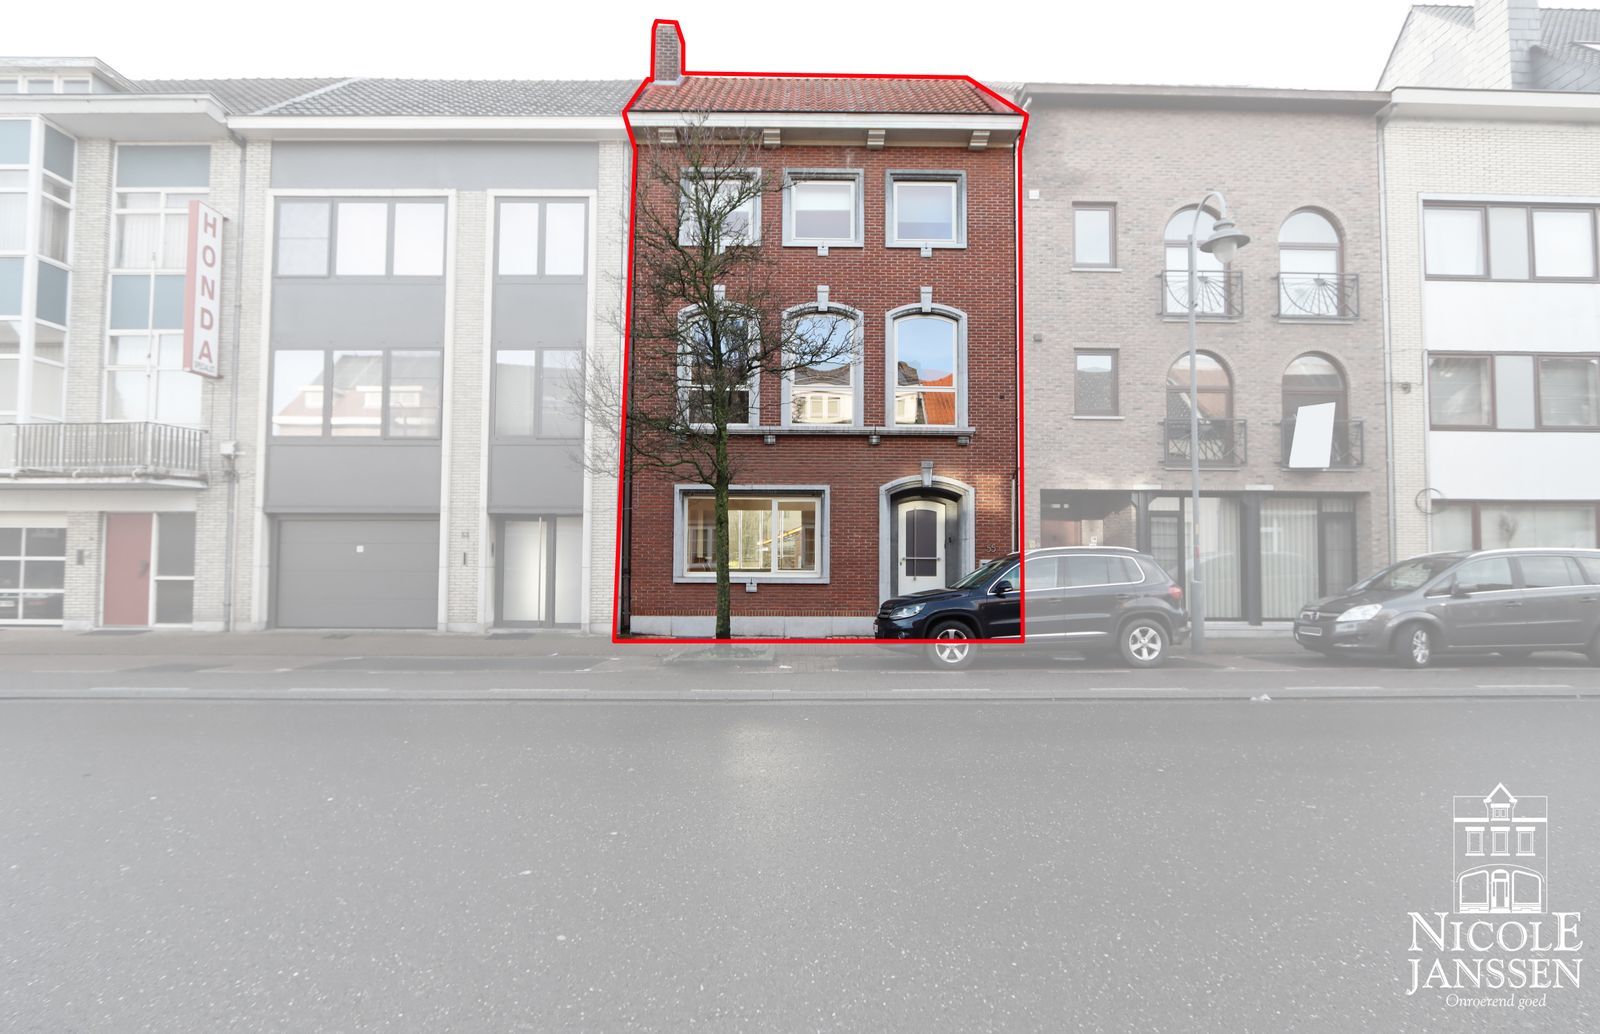 1 Nicole Janssen - huis te koop - Koning Albertlaan 55 te Maaseik - voorzijde aangeduid.jpg